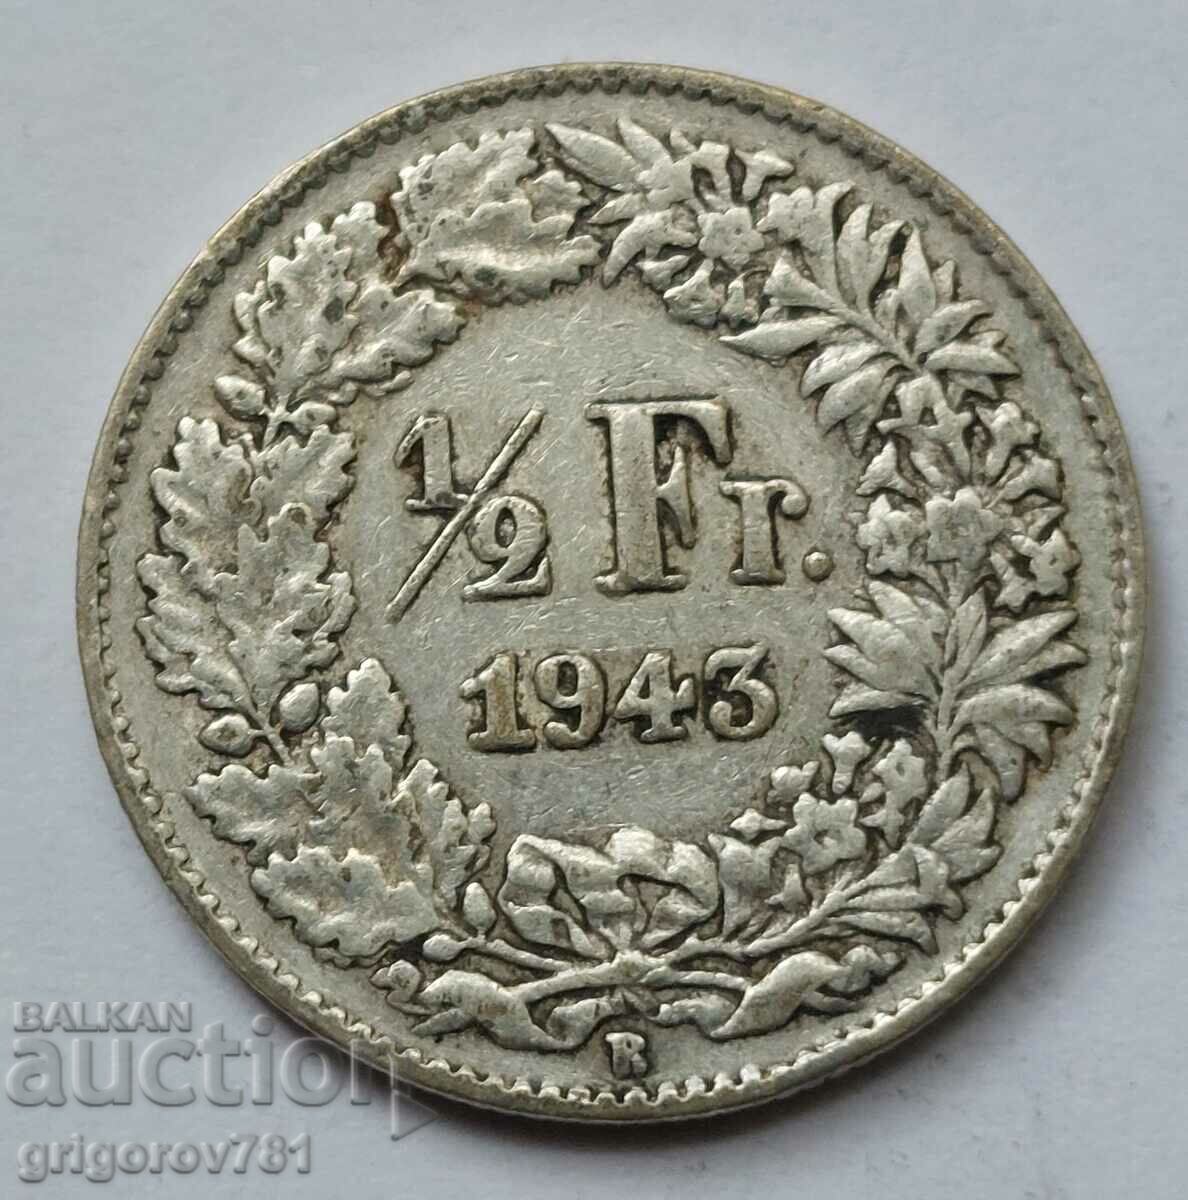 1/2 Franc Argint Elveția 1943 B - Monedă de argint #73